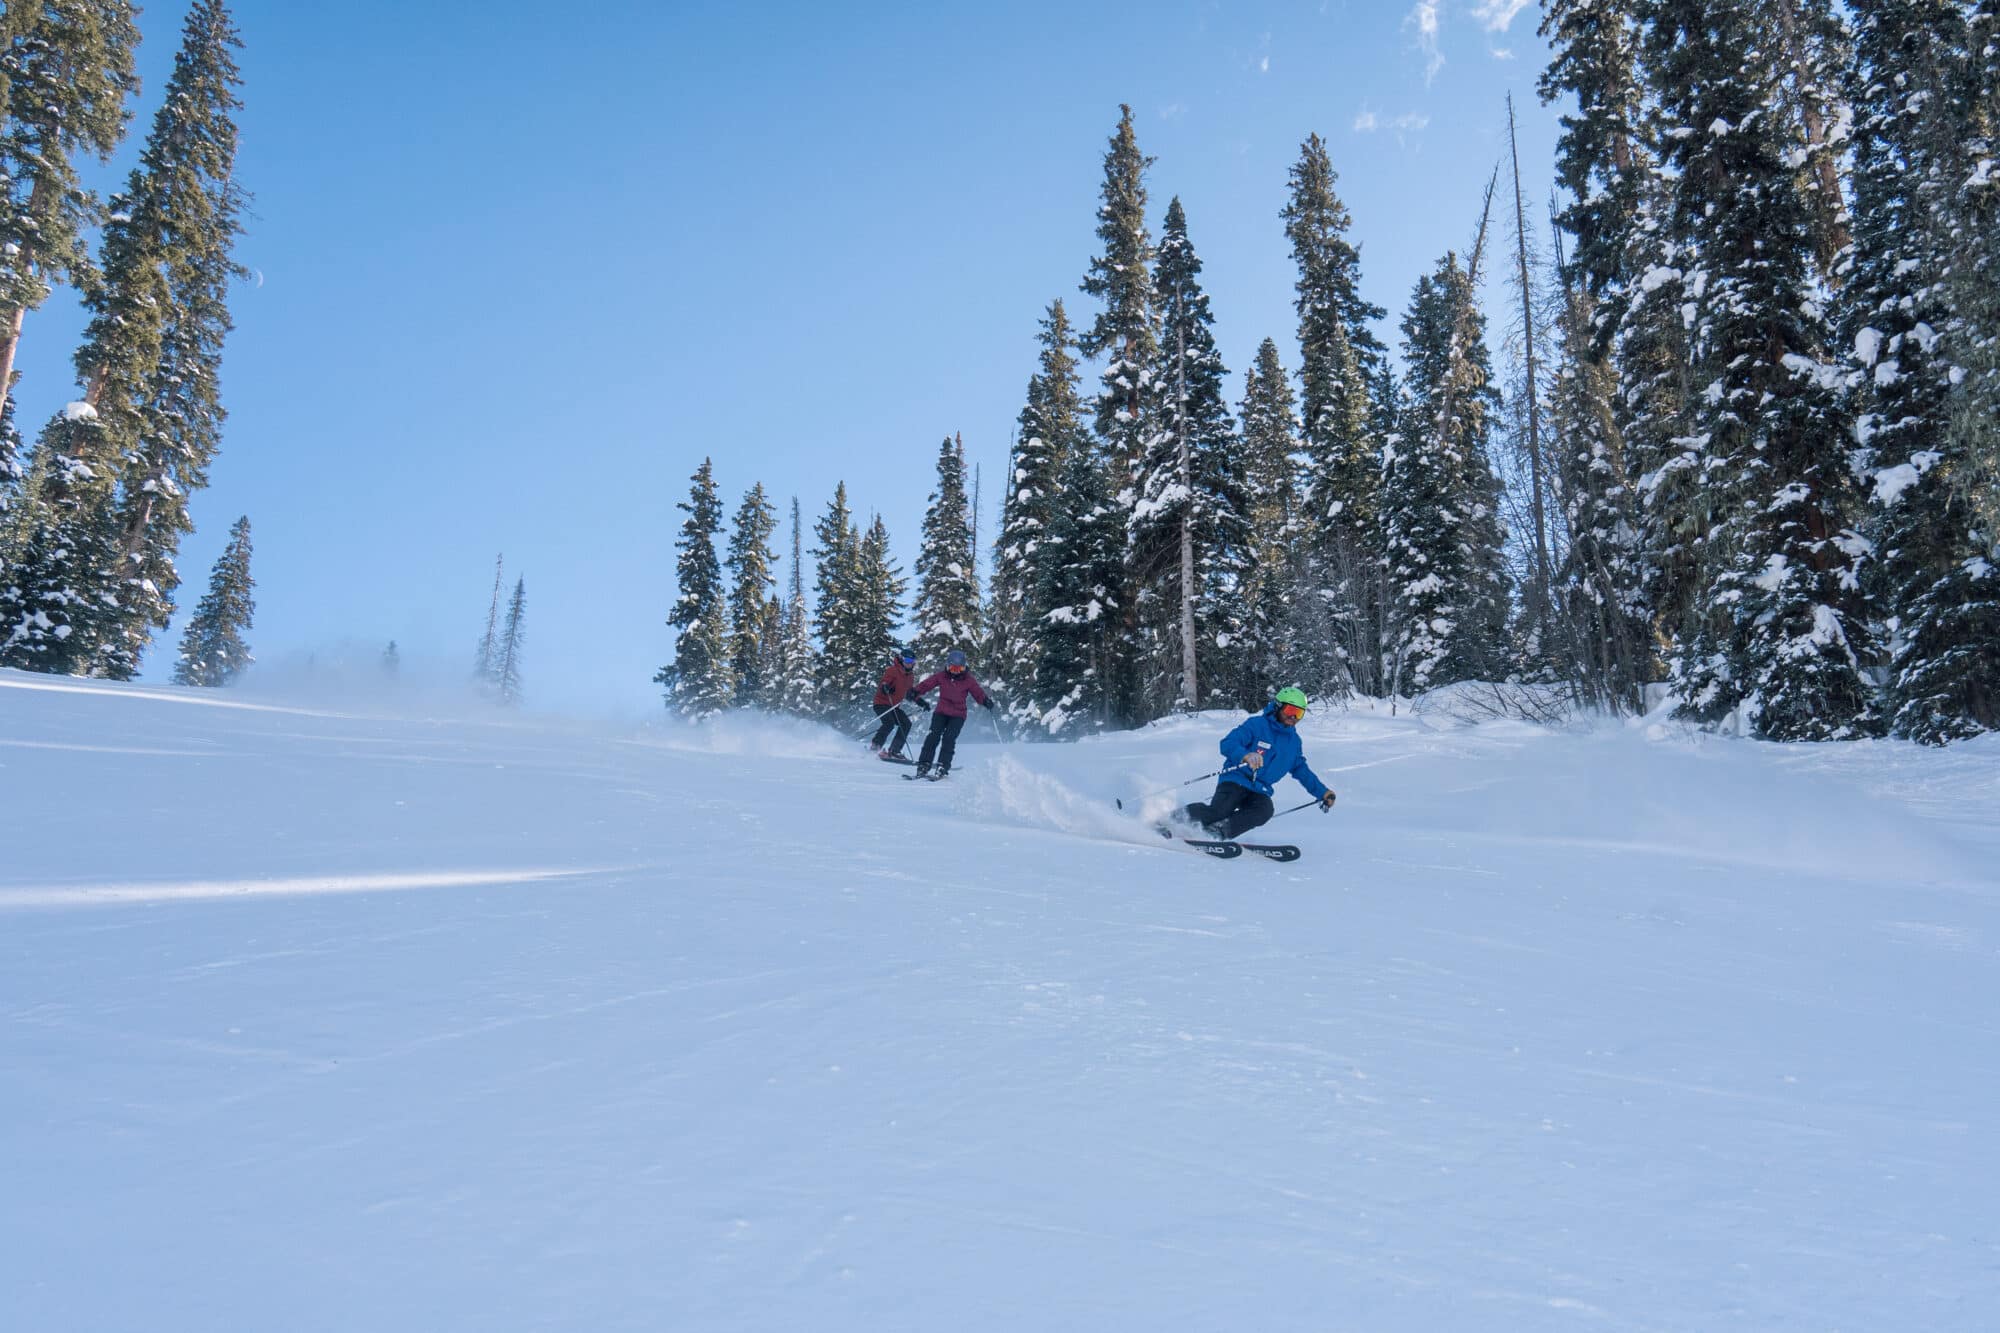 Adult ski clinic groups ski down a groomer run together